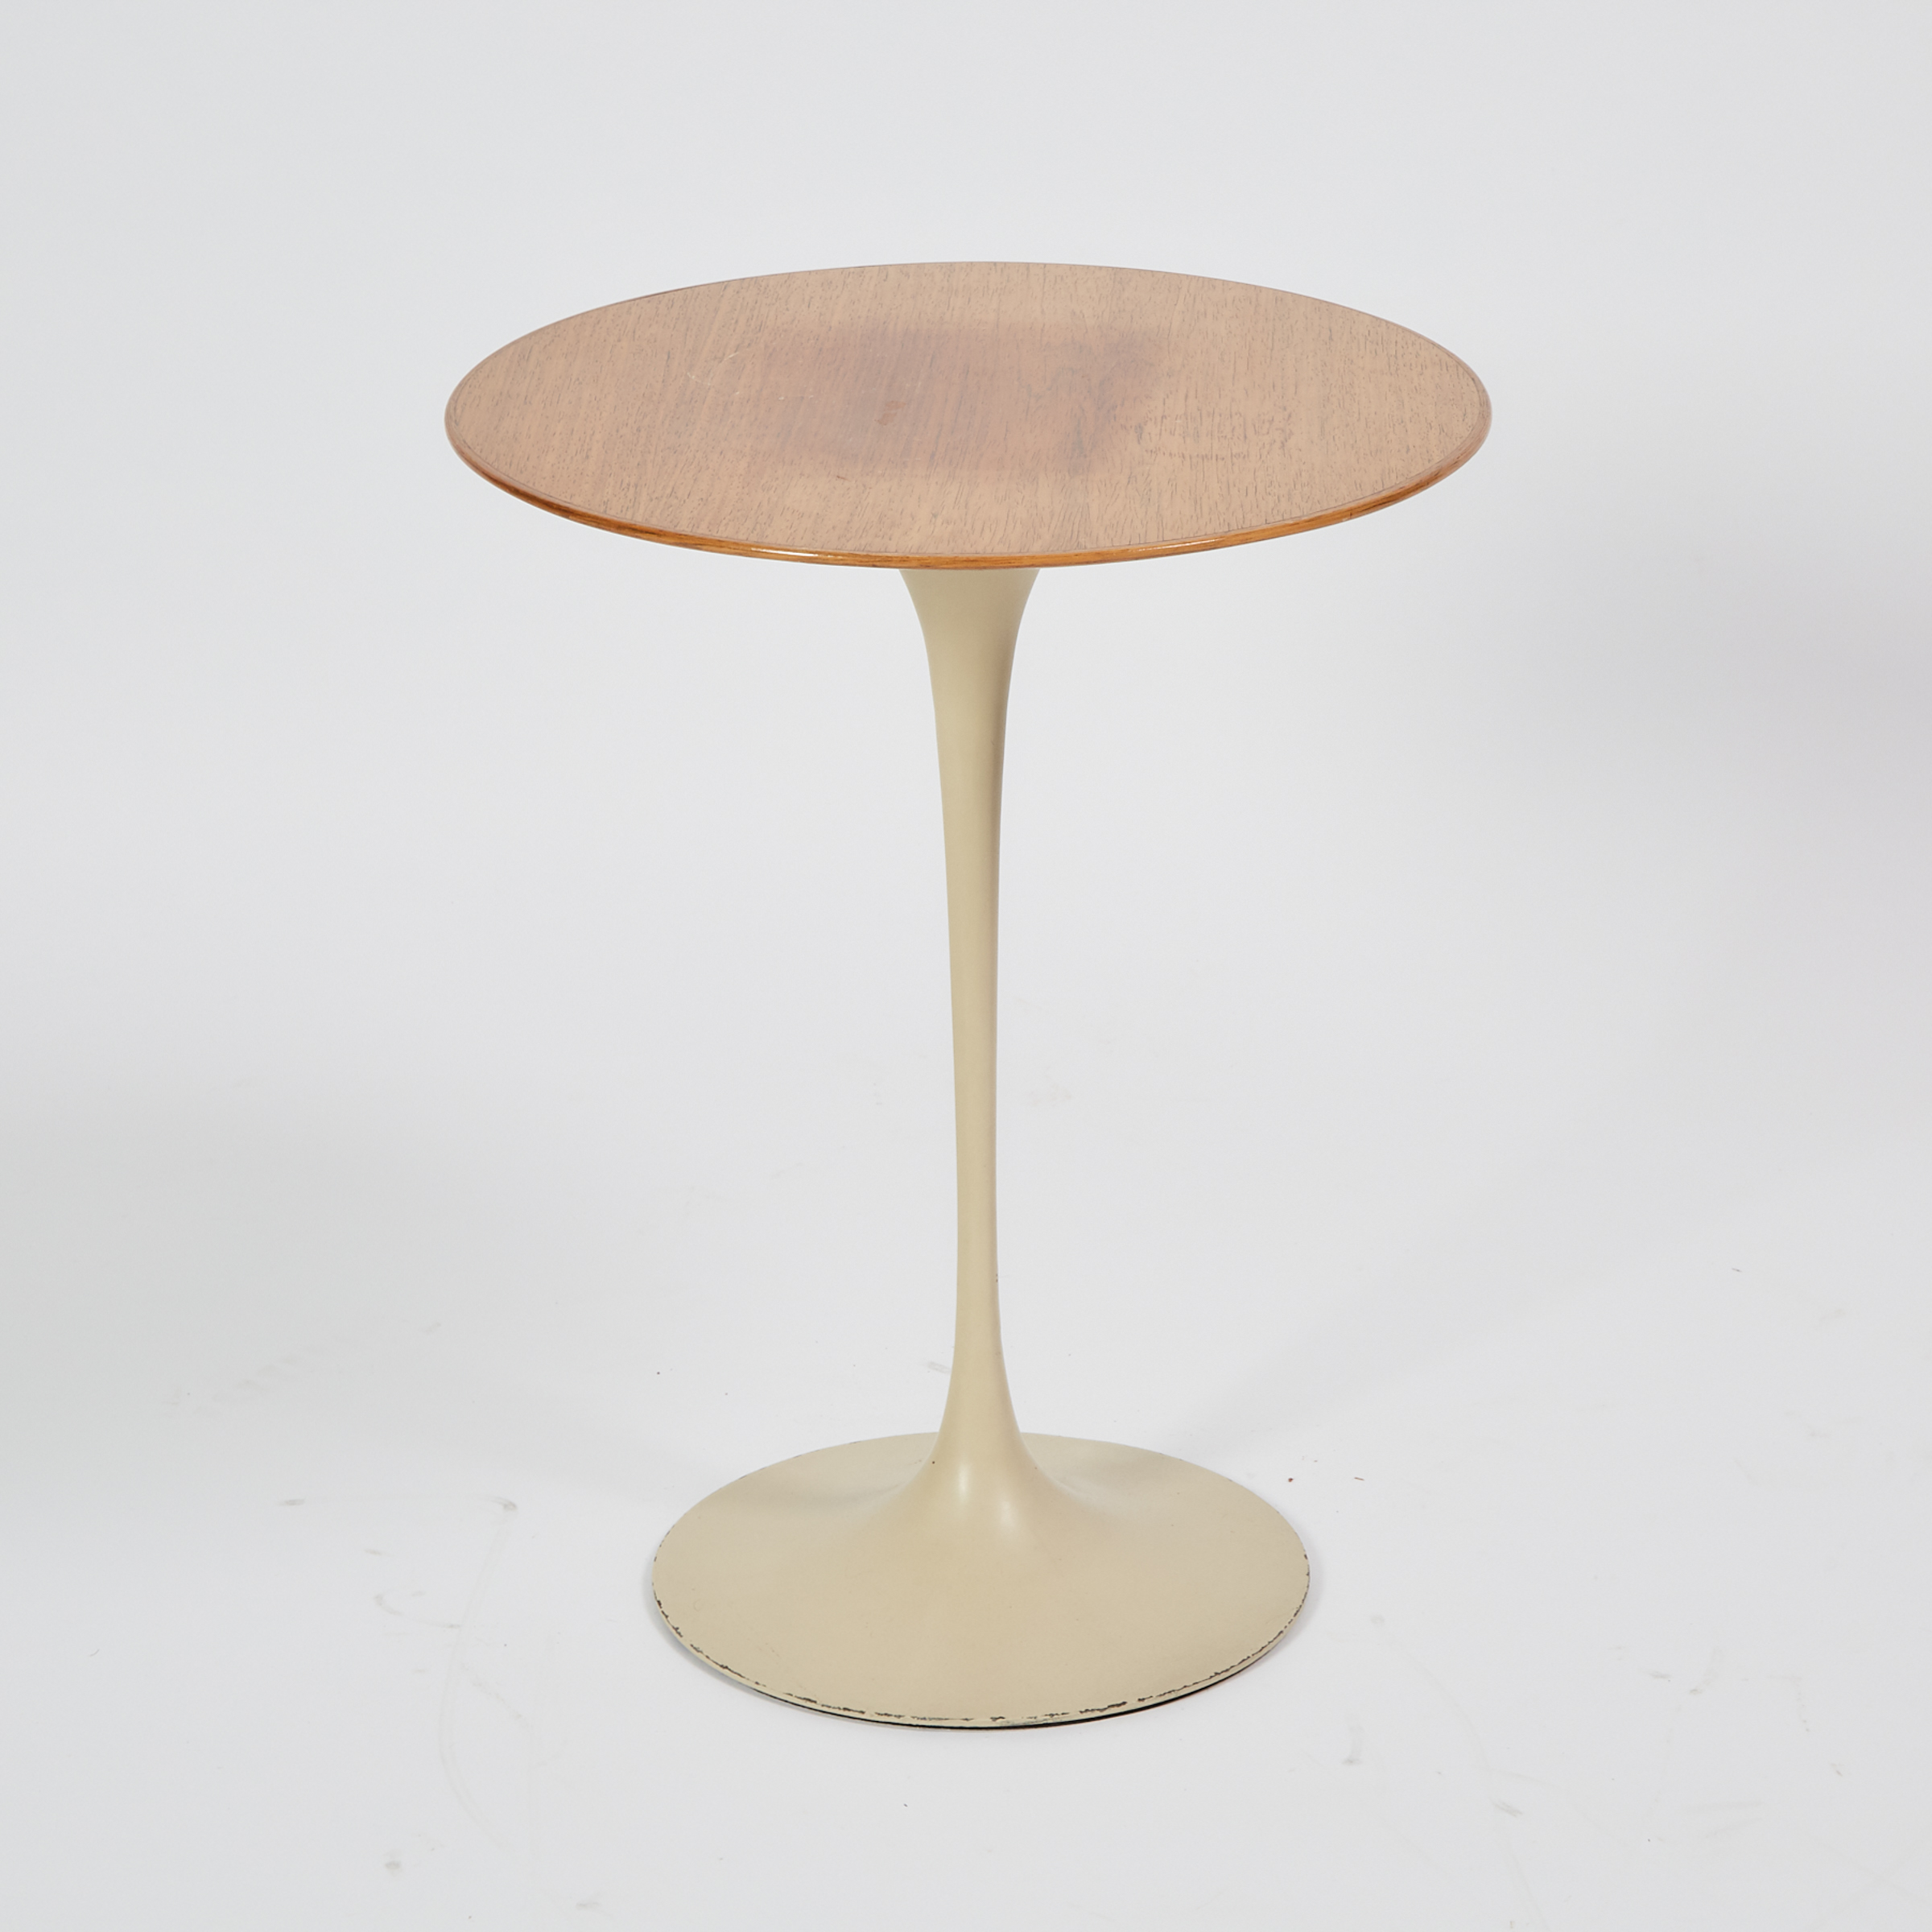 Eero Saarinen for Knoll Tulip Side Table, mid 20th century